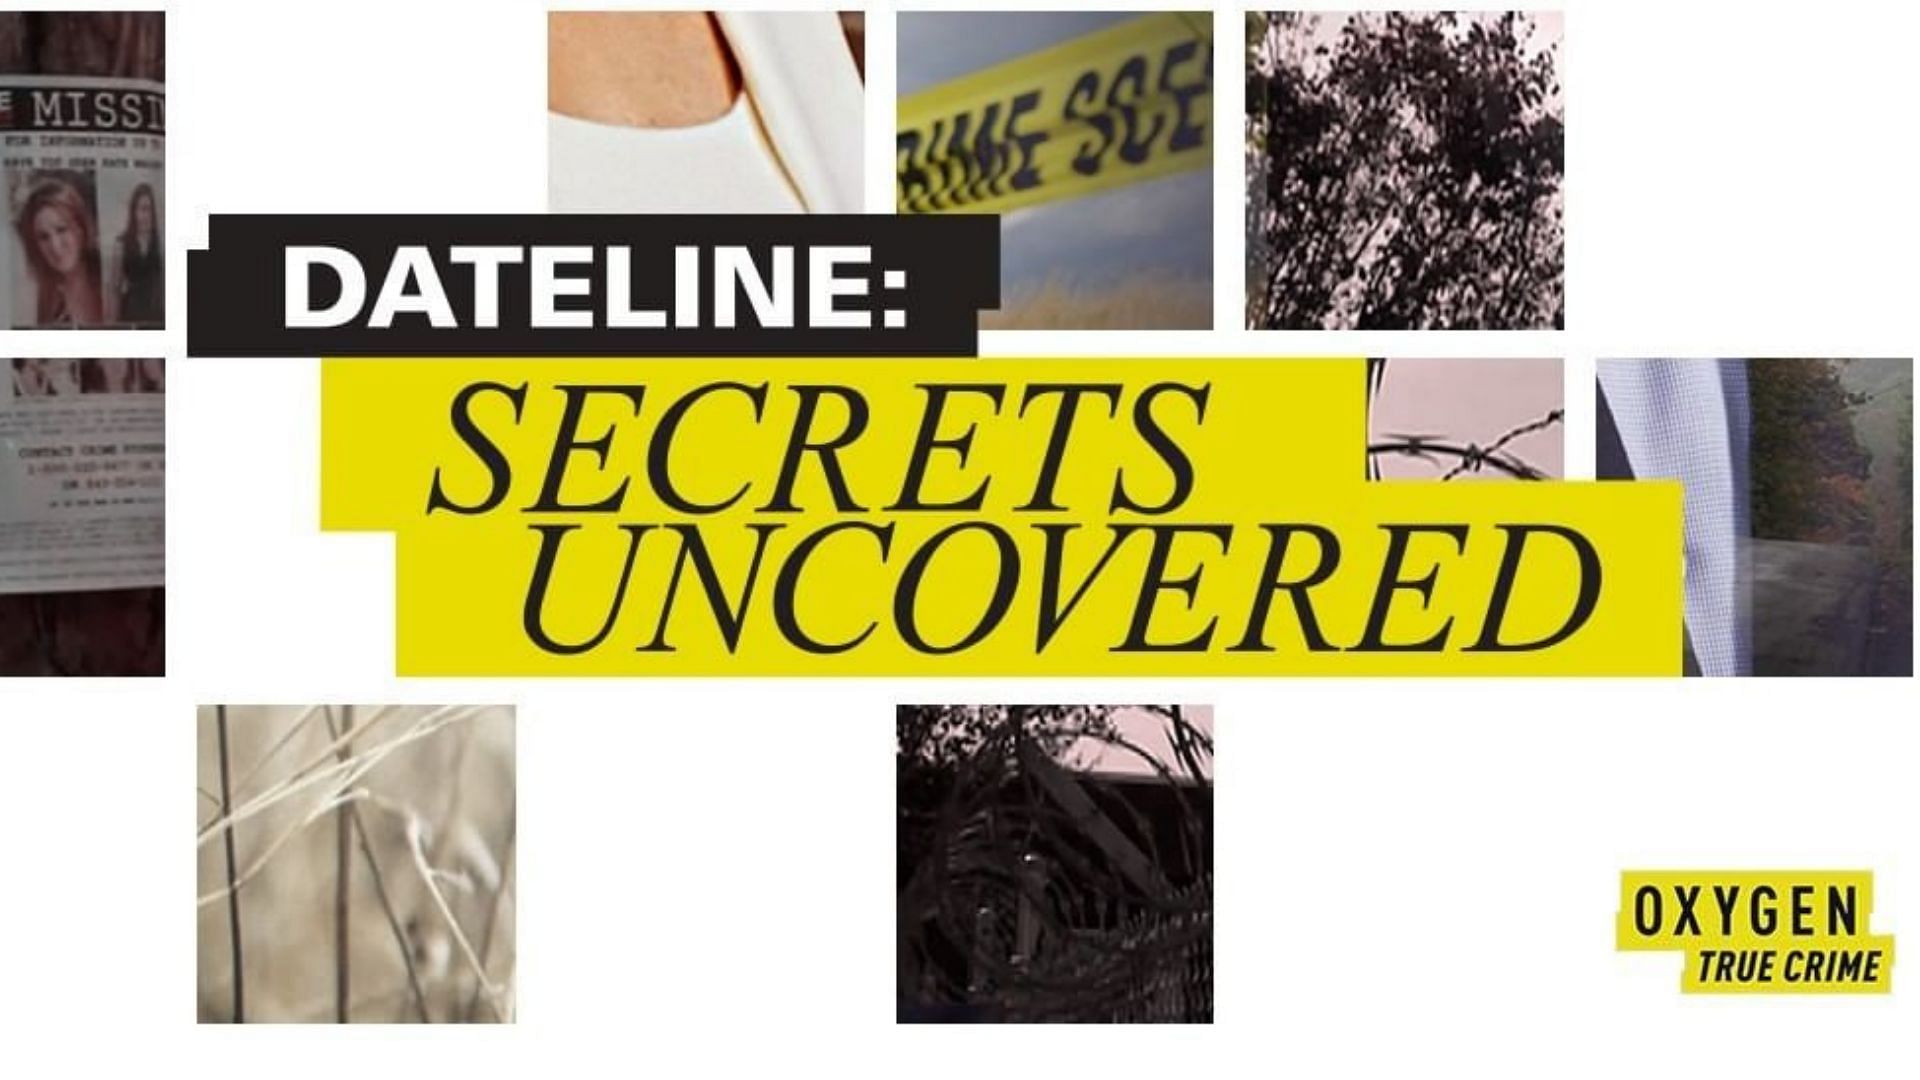 A promotional poster for Dateline: Secrets Uncovered (Image Via oxygen/Instagram)